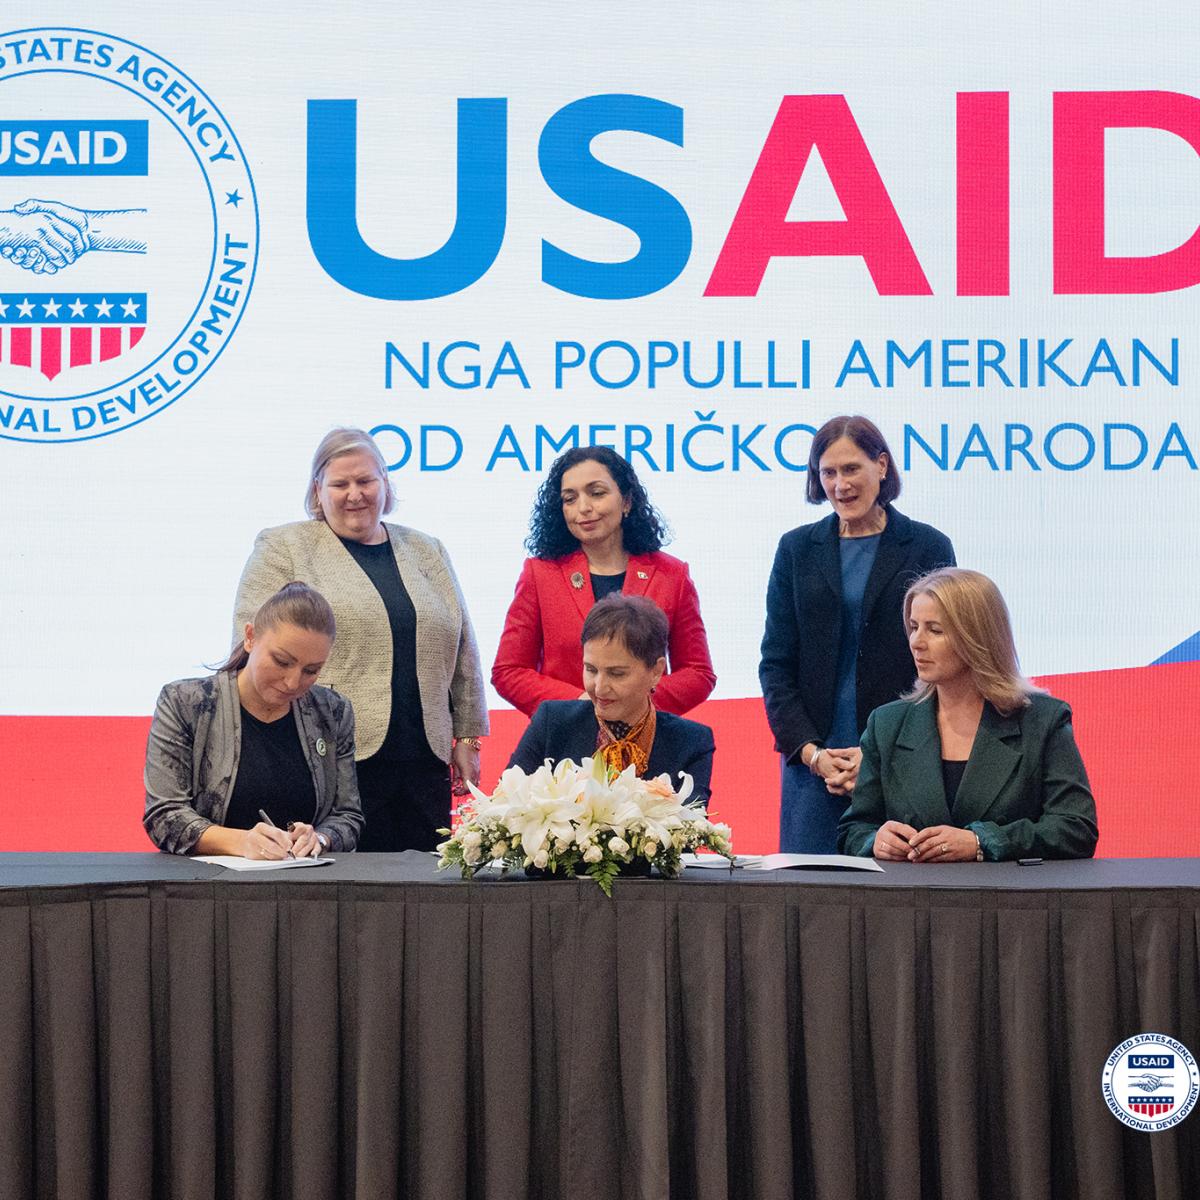 USAID Champions Women Business Leaders During Global Entrepreneurship Week 